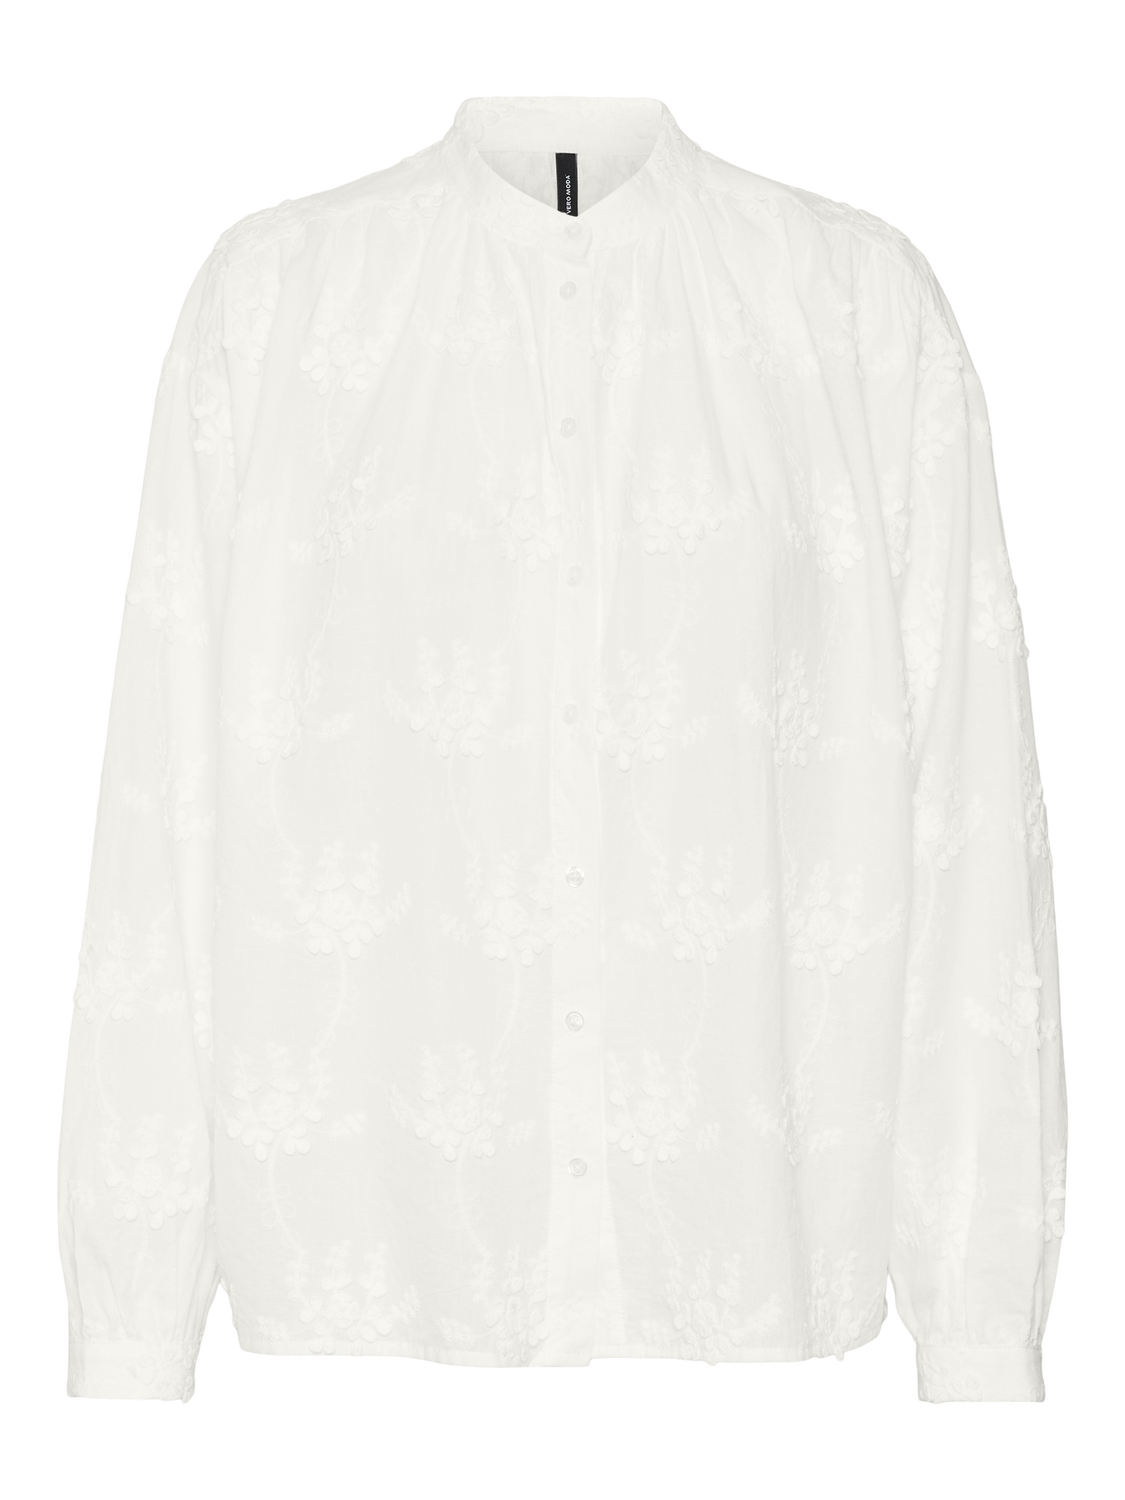 White – VMFILINE VERO Trondheim Shirts MODA - Snow